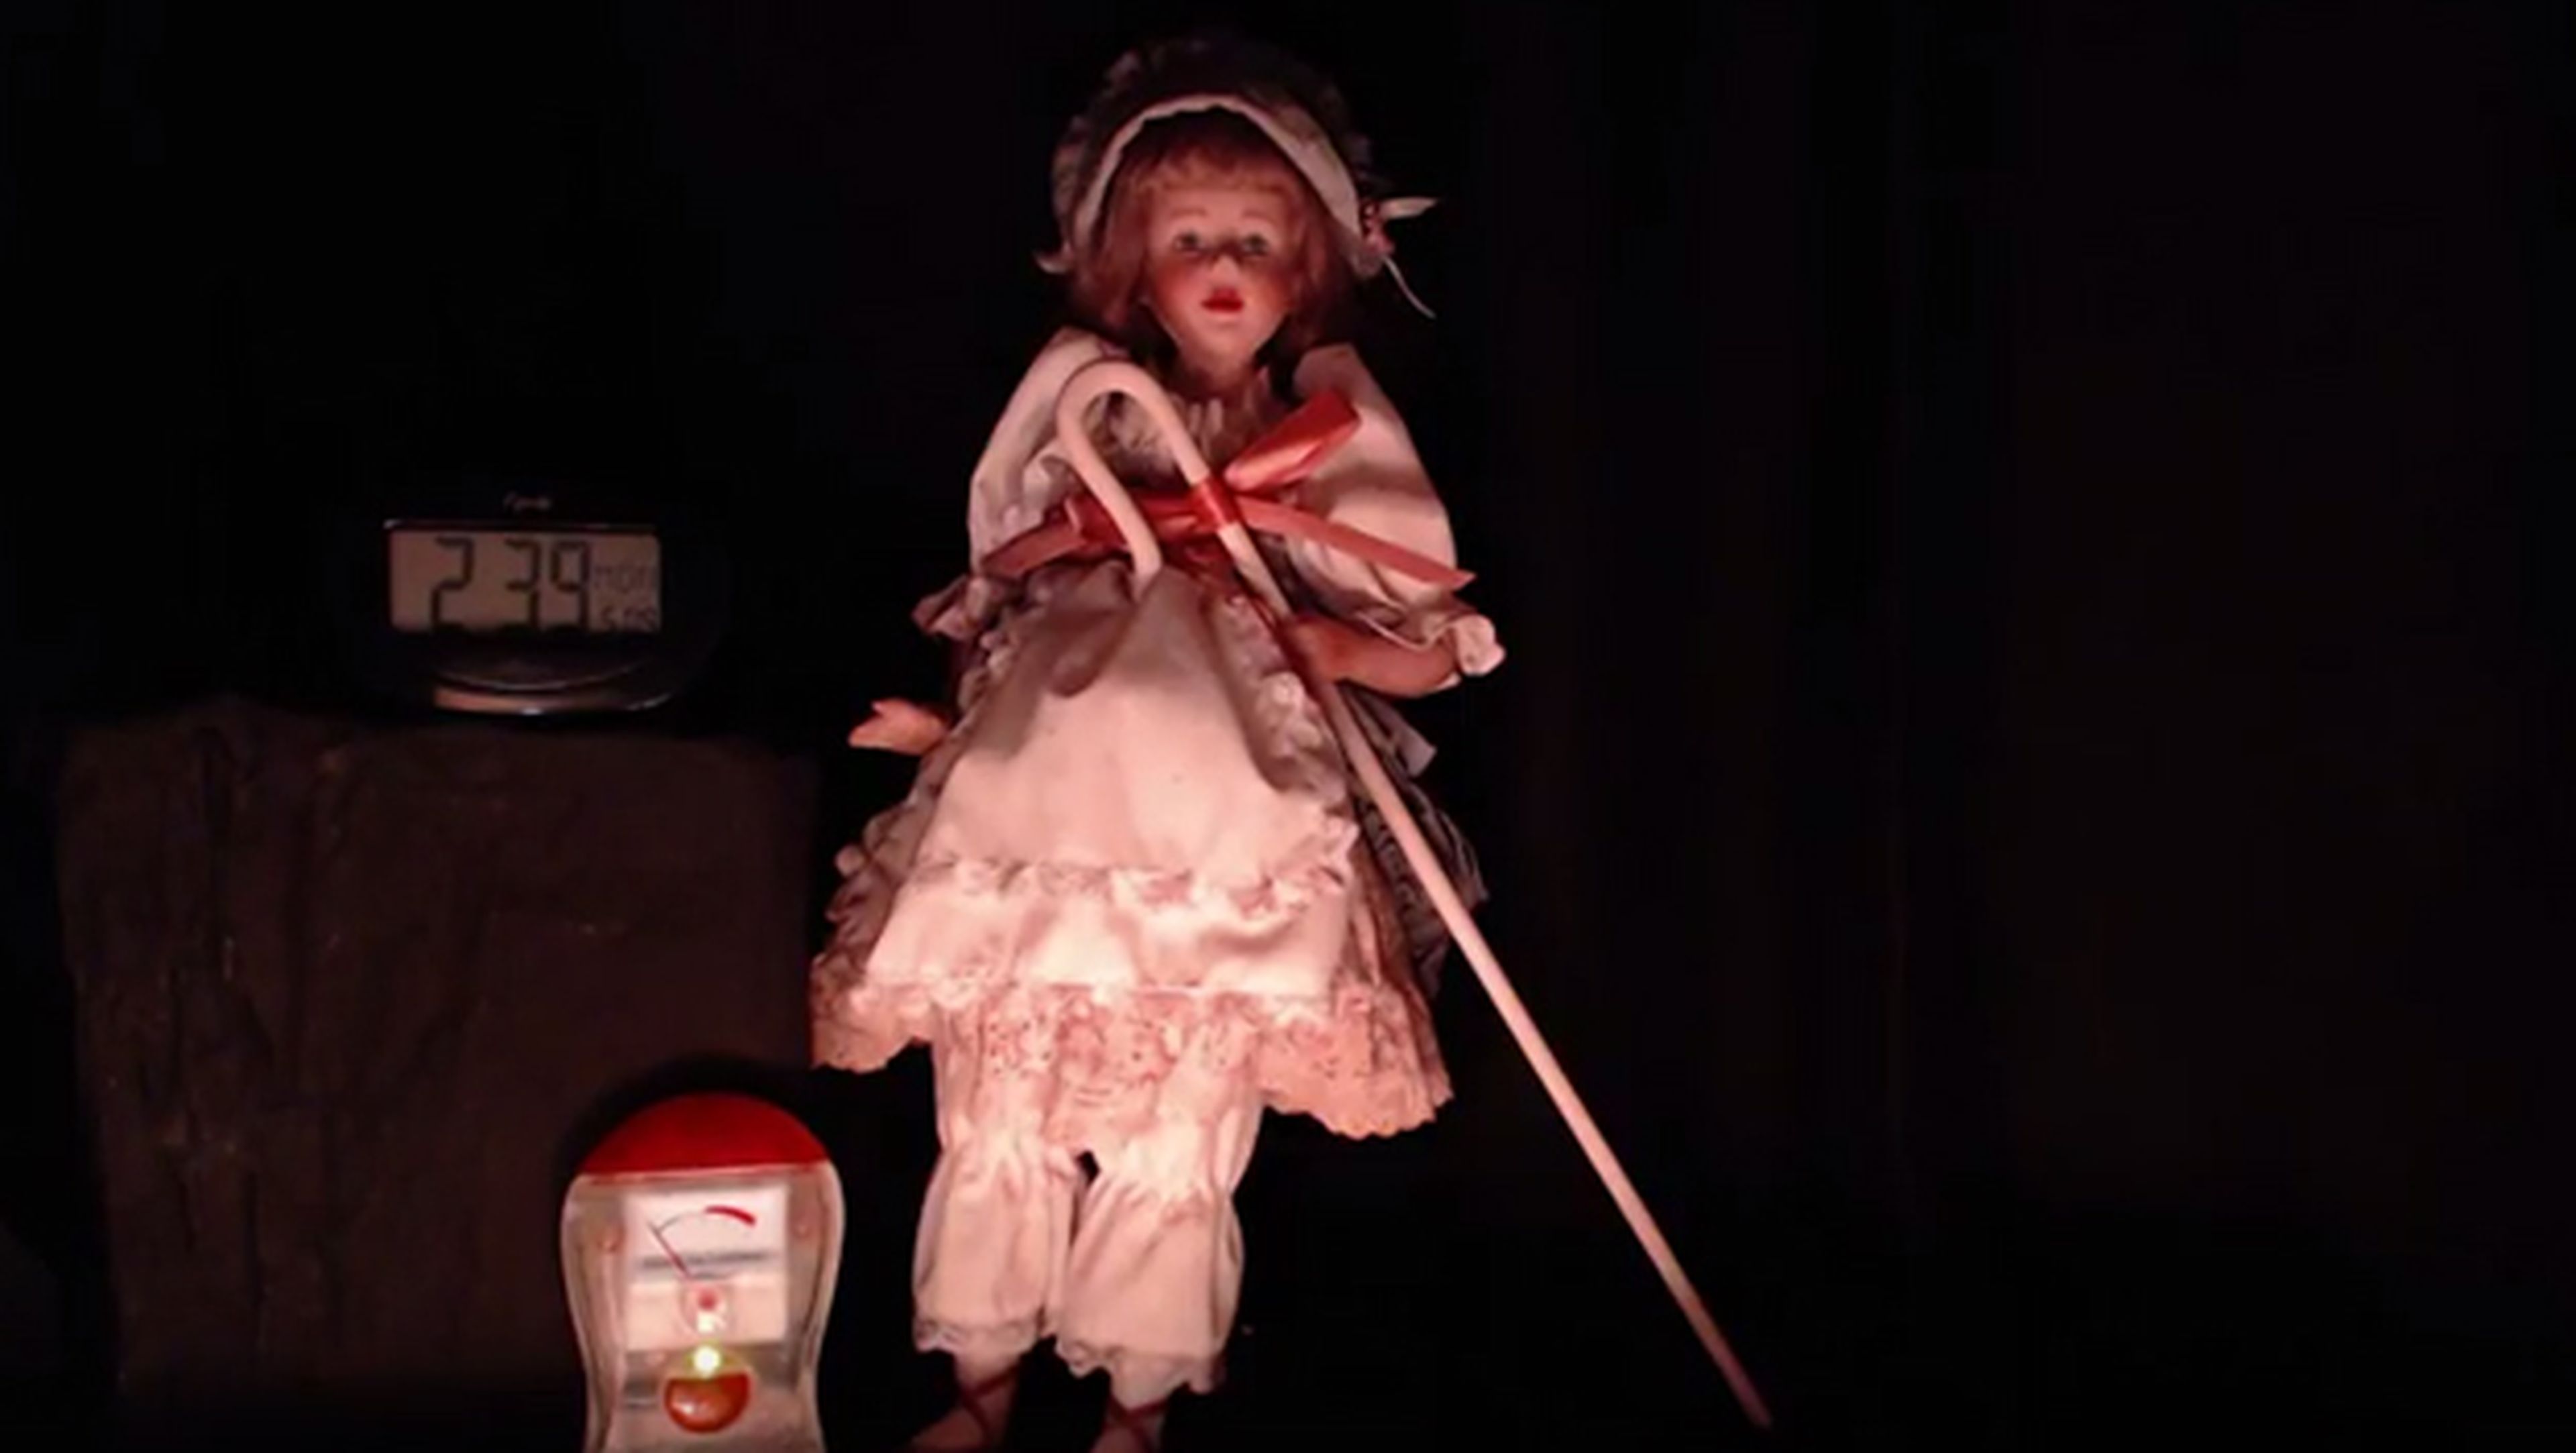 La muñeca embrujada de YouTube